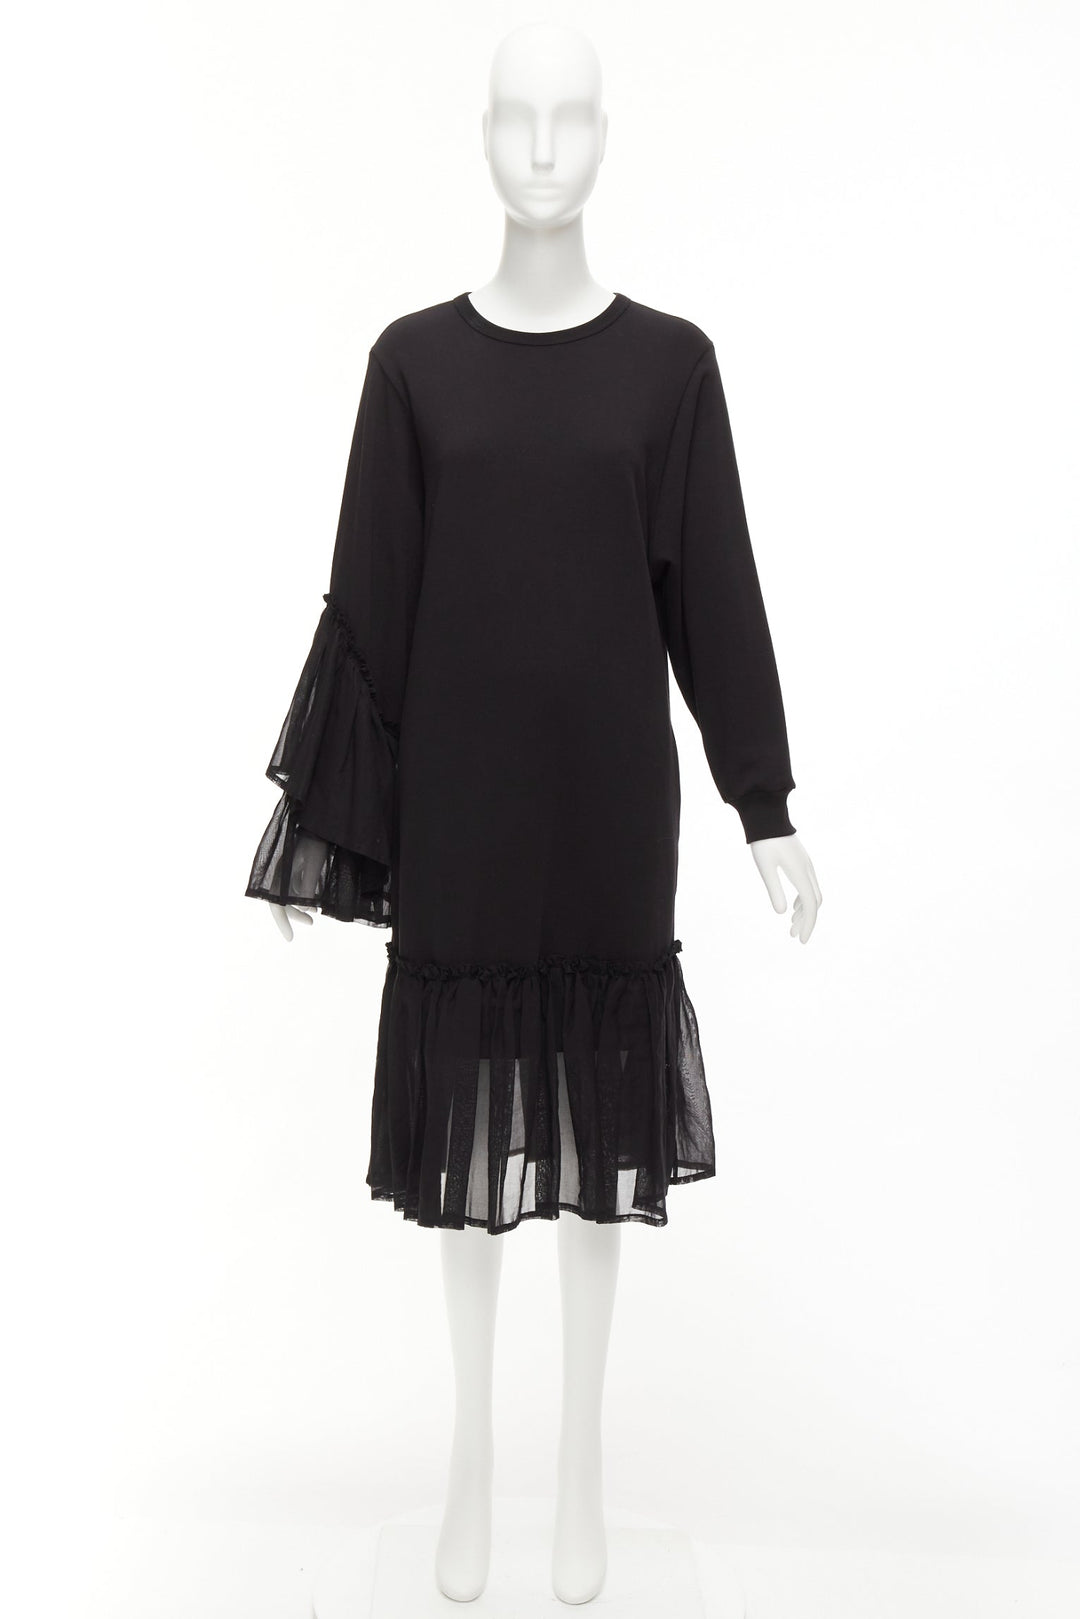 DRIES VAN NOTEN black cotton asymmetric sleeve ruffle hem sweatshirt dress S